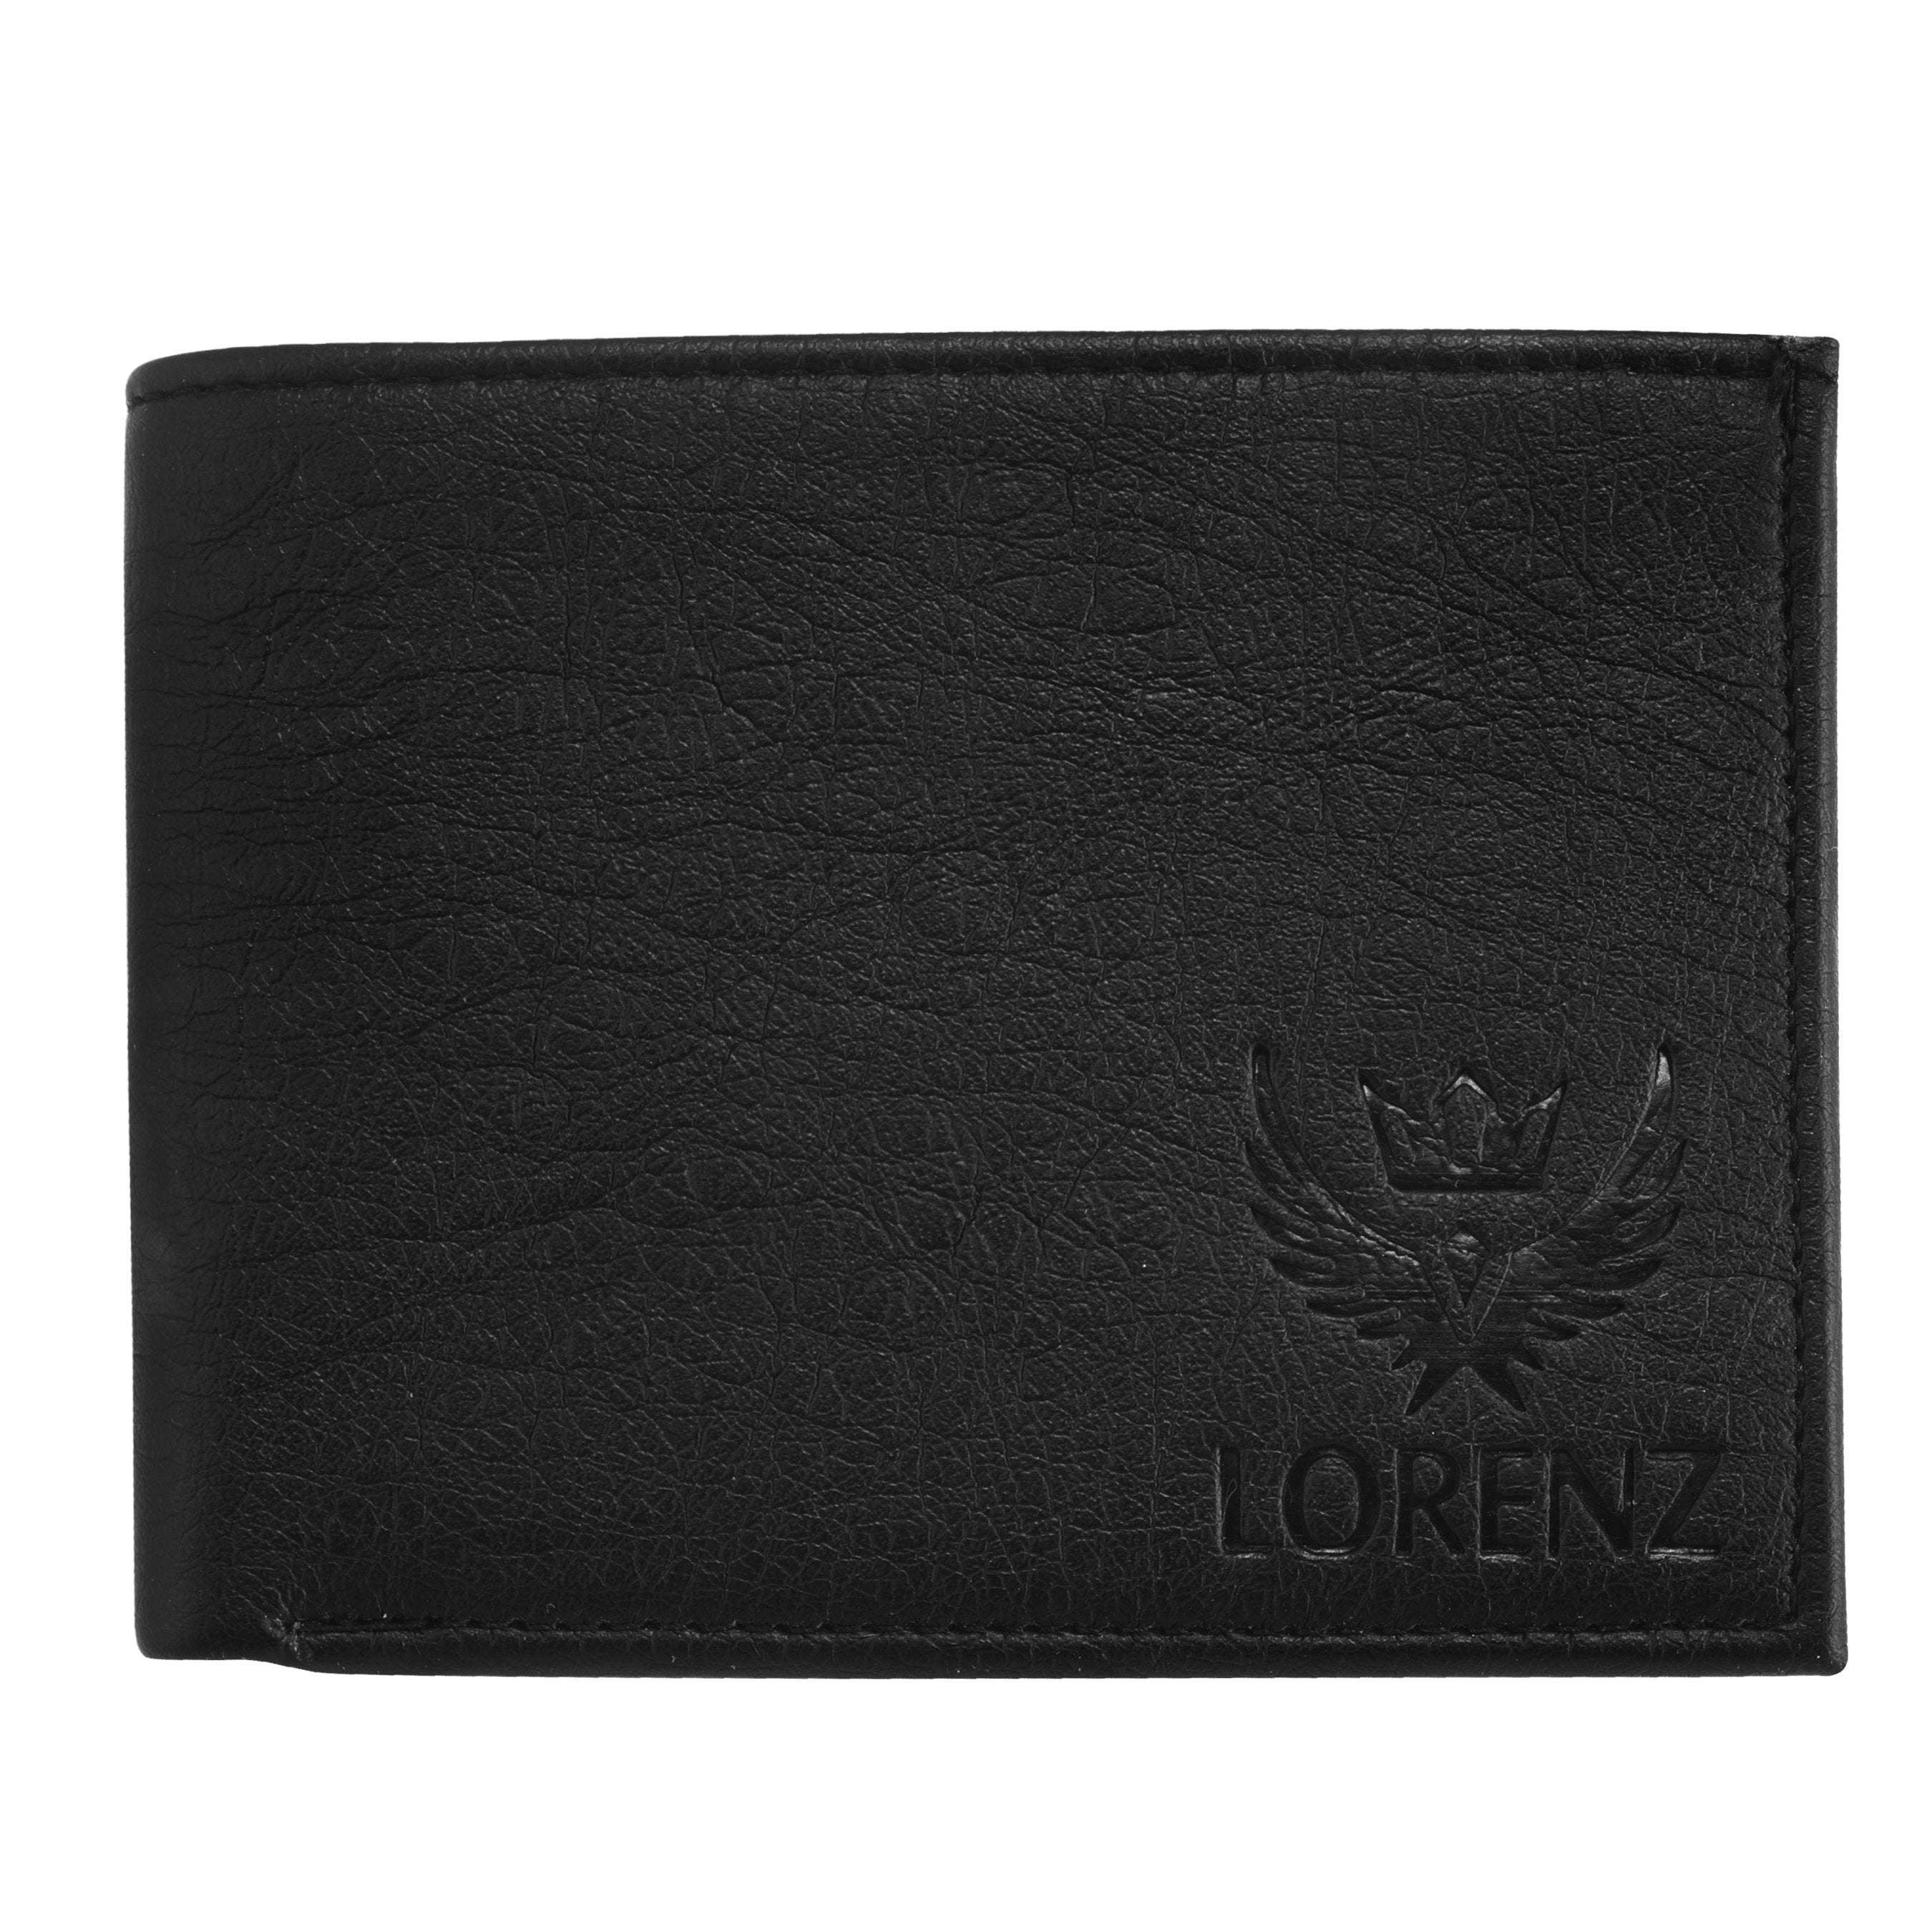 Lorenz CM-2027WL-01 Combo of Men's Black Dial 'Maine NAHI PI HAI' Watch and Black Wallet - Lorenz Fashion